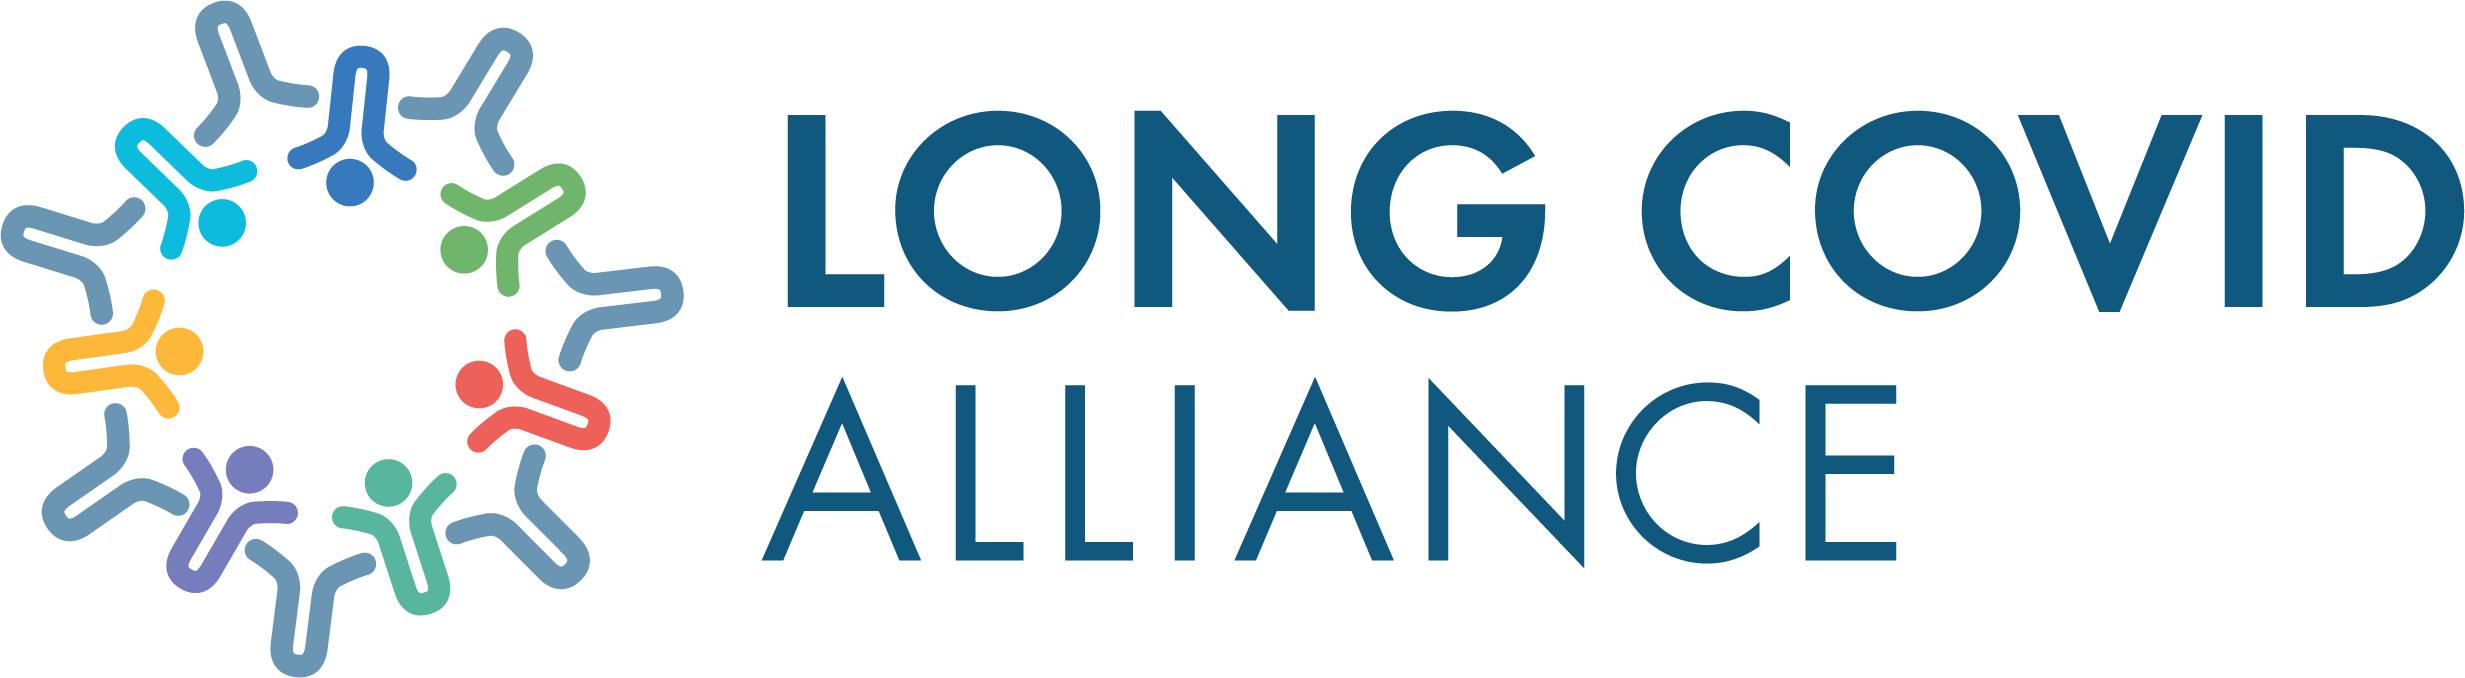 Logo Long covid alliance